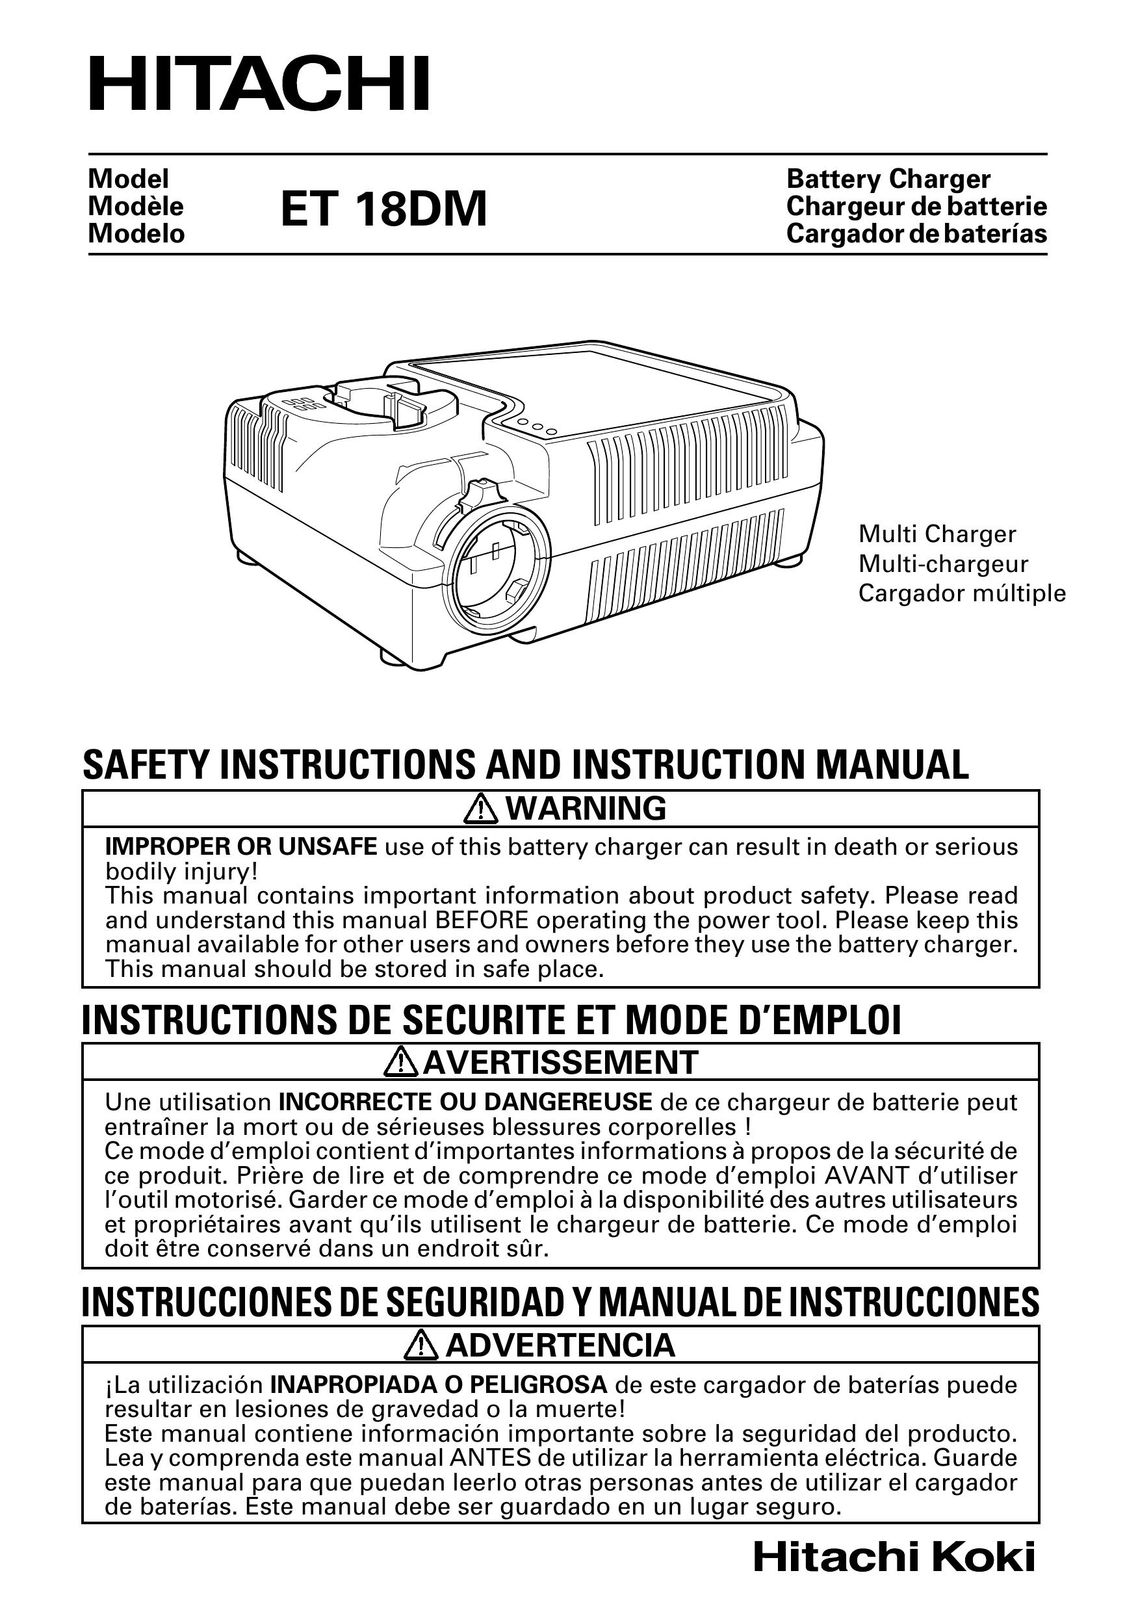 Hitachi ET 18DM Battery Charger User Manual